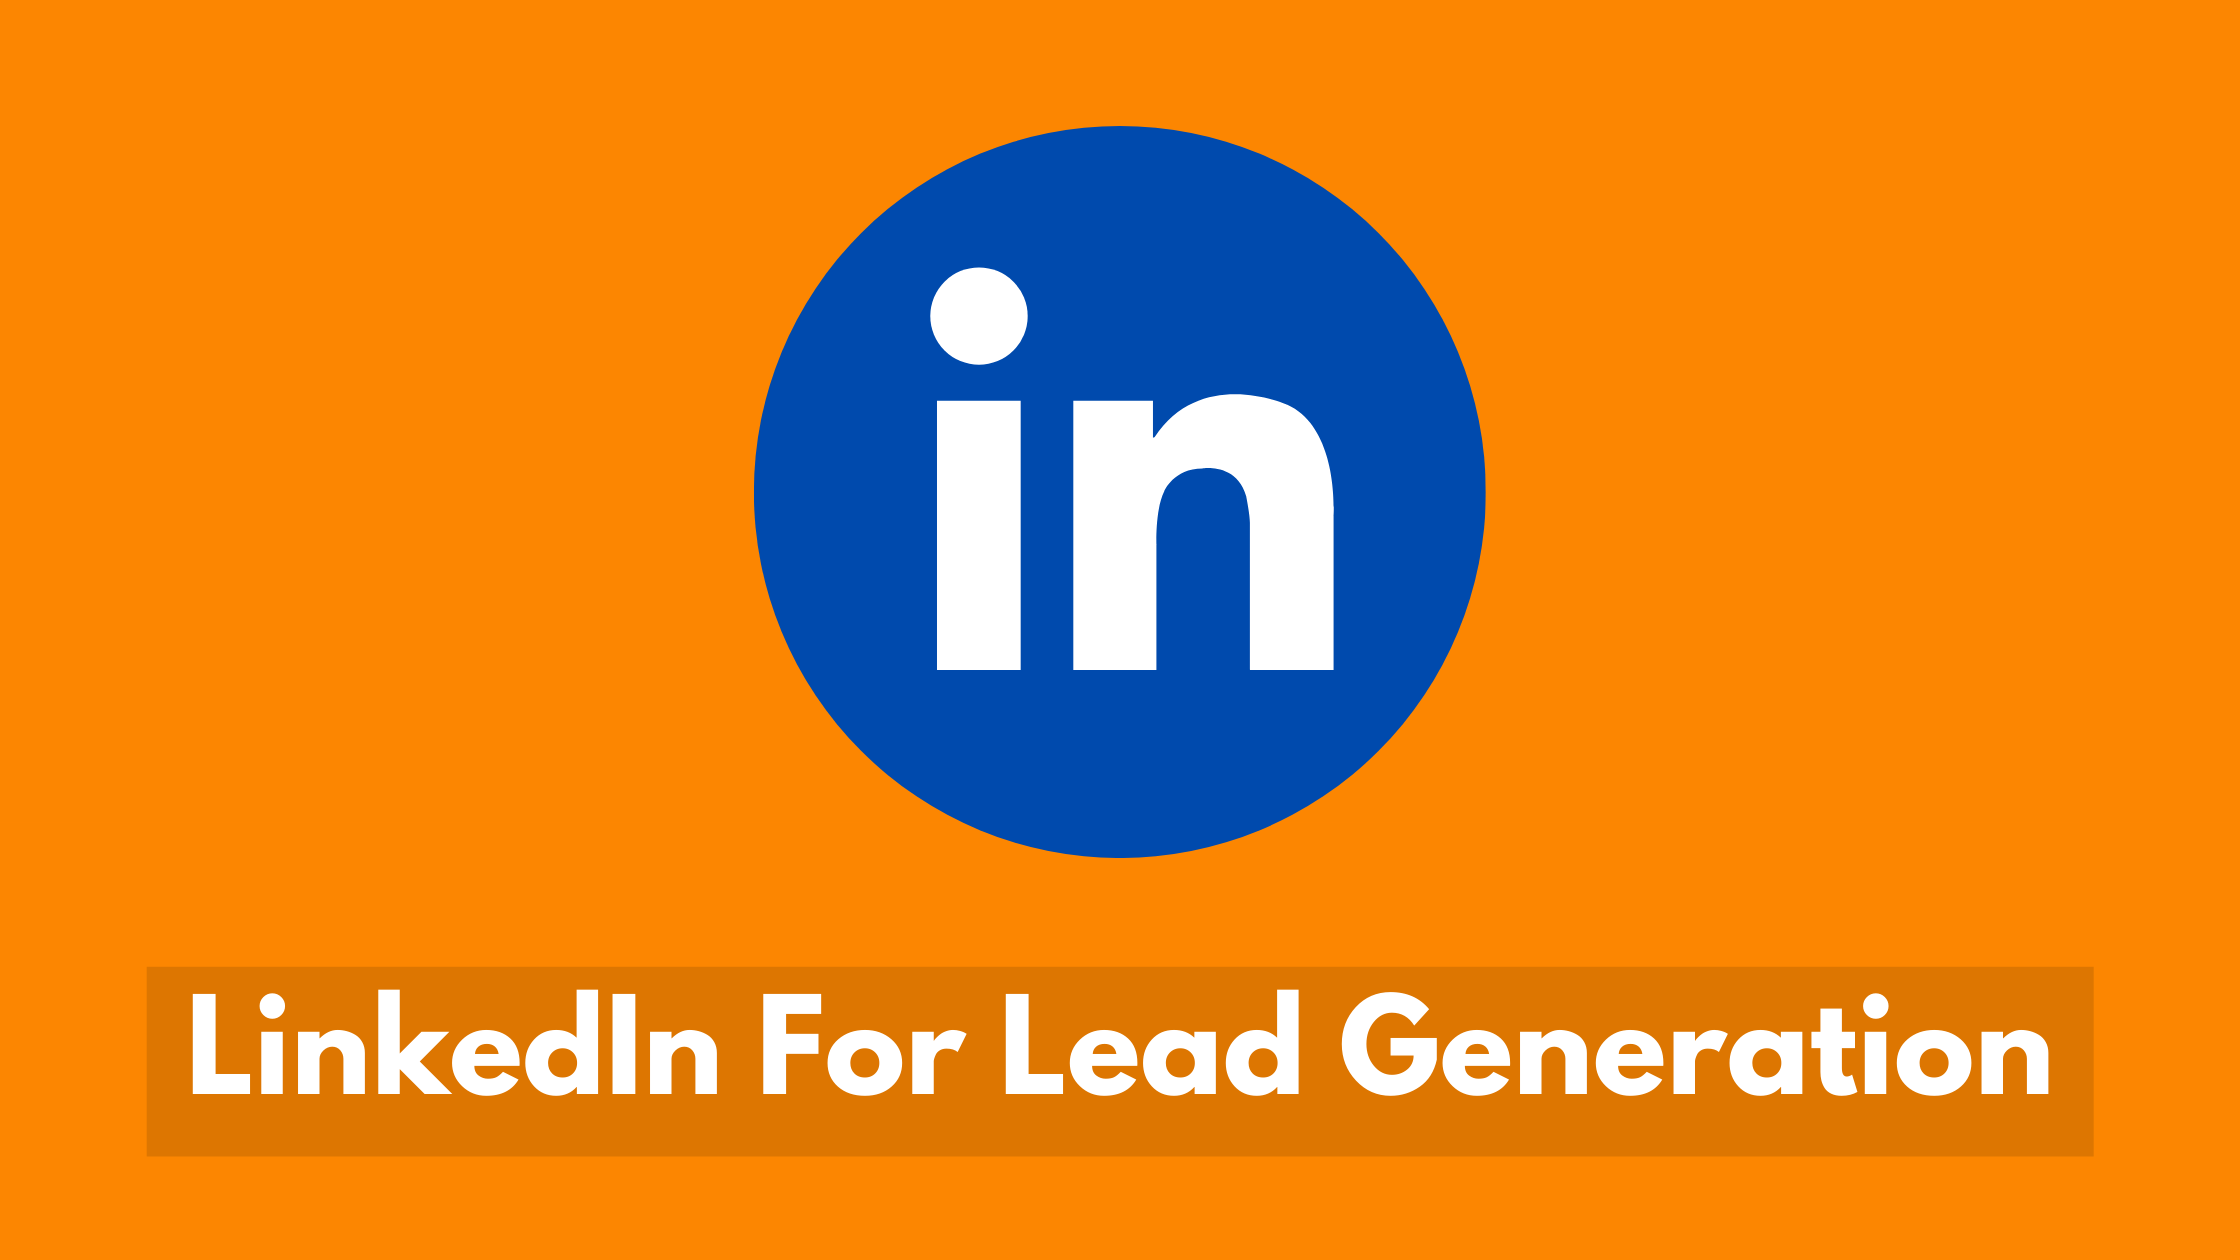 LinkedIn For Lead Generation